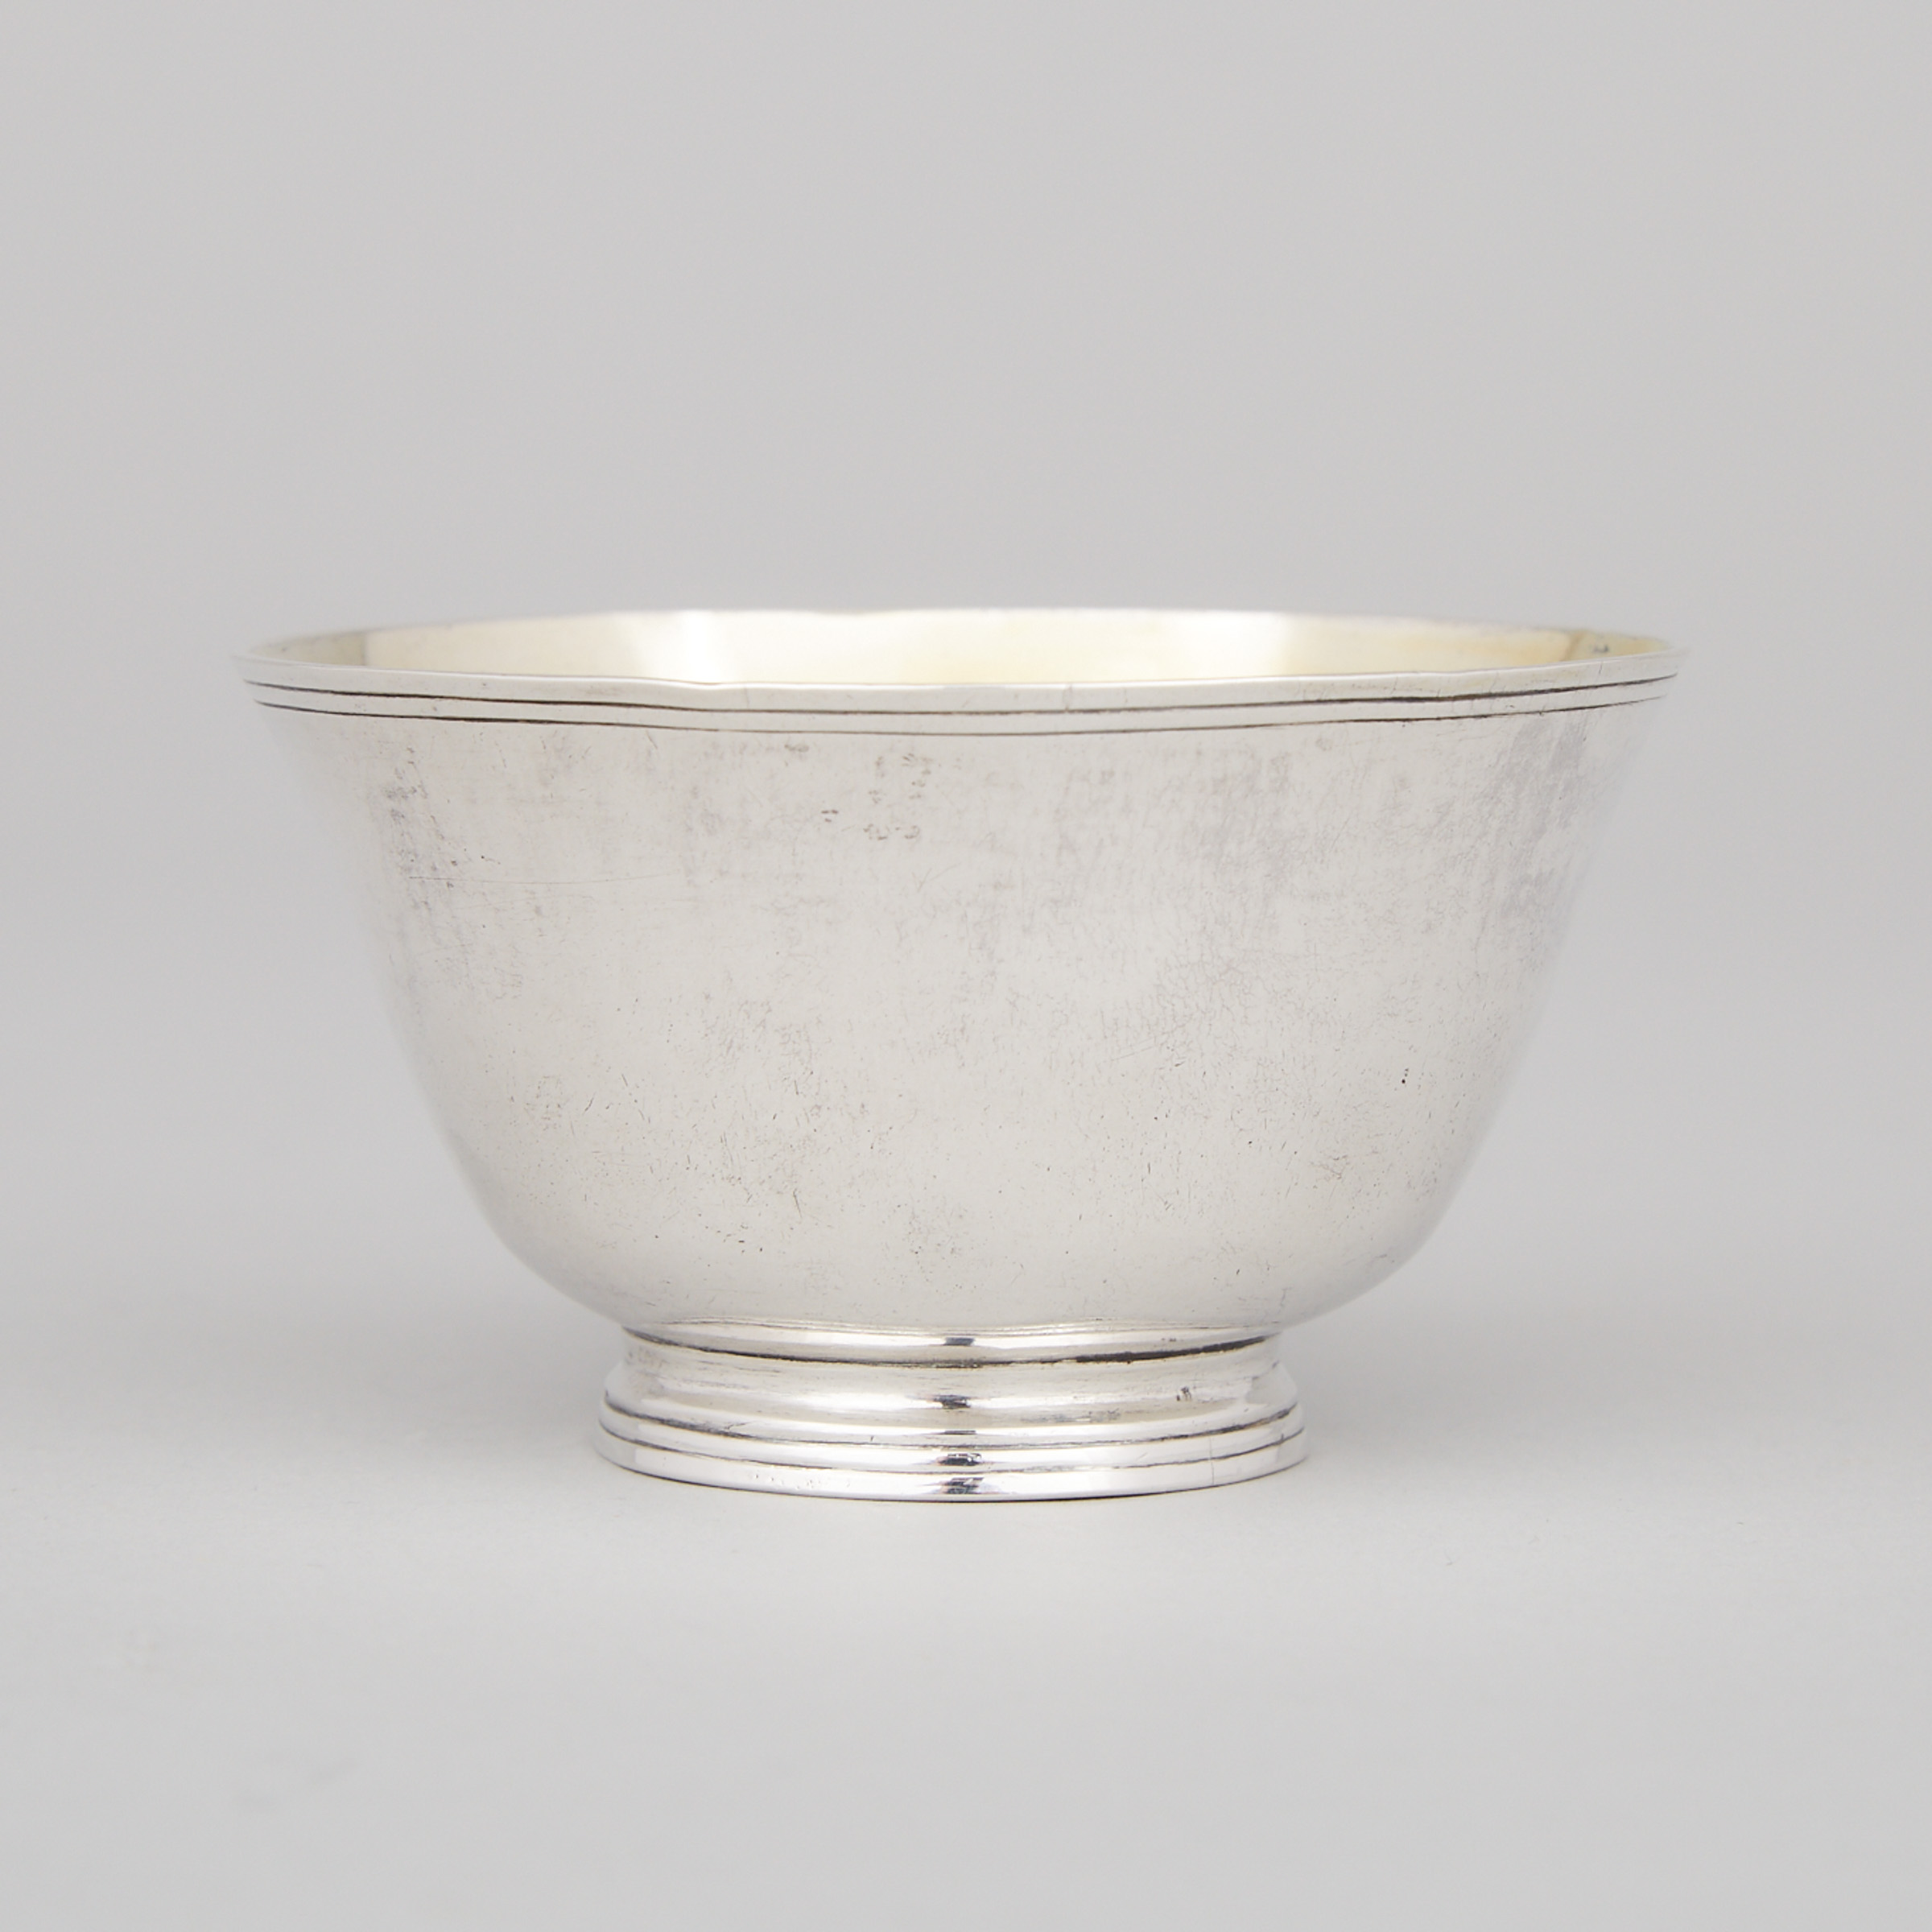 Spanish Silver Small Bowl, Barcelona, late 18th century